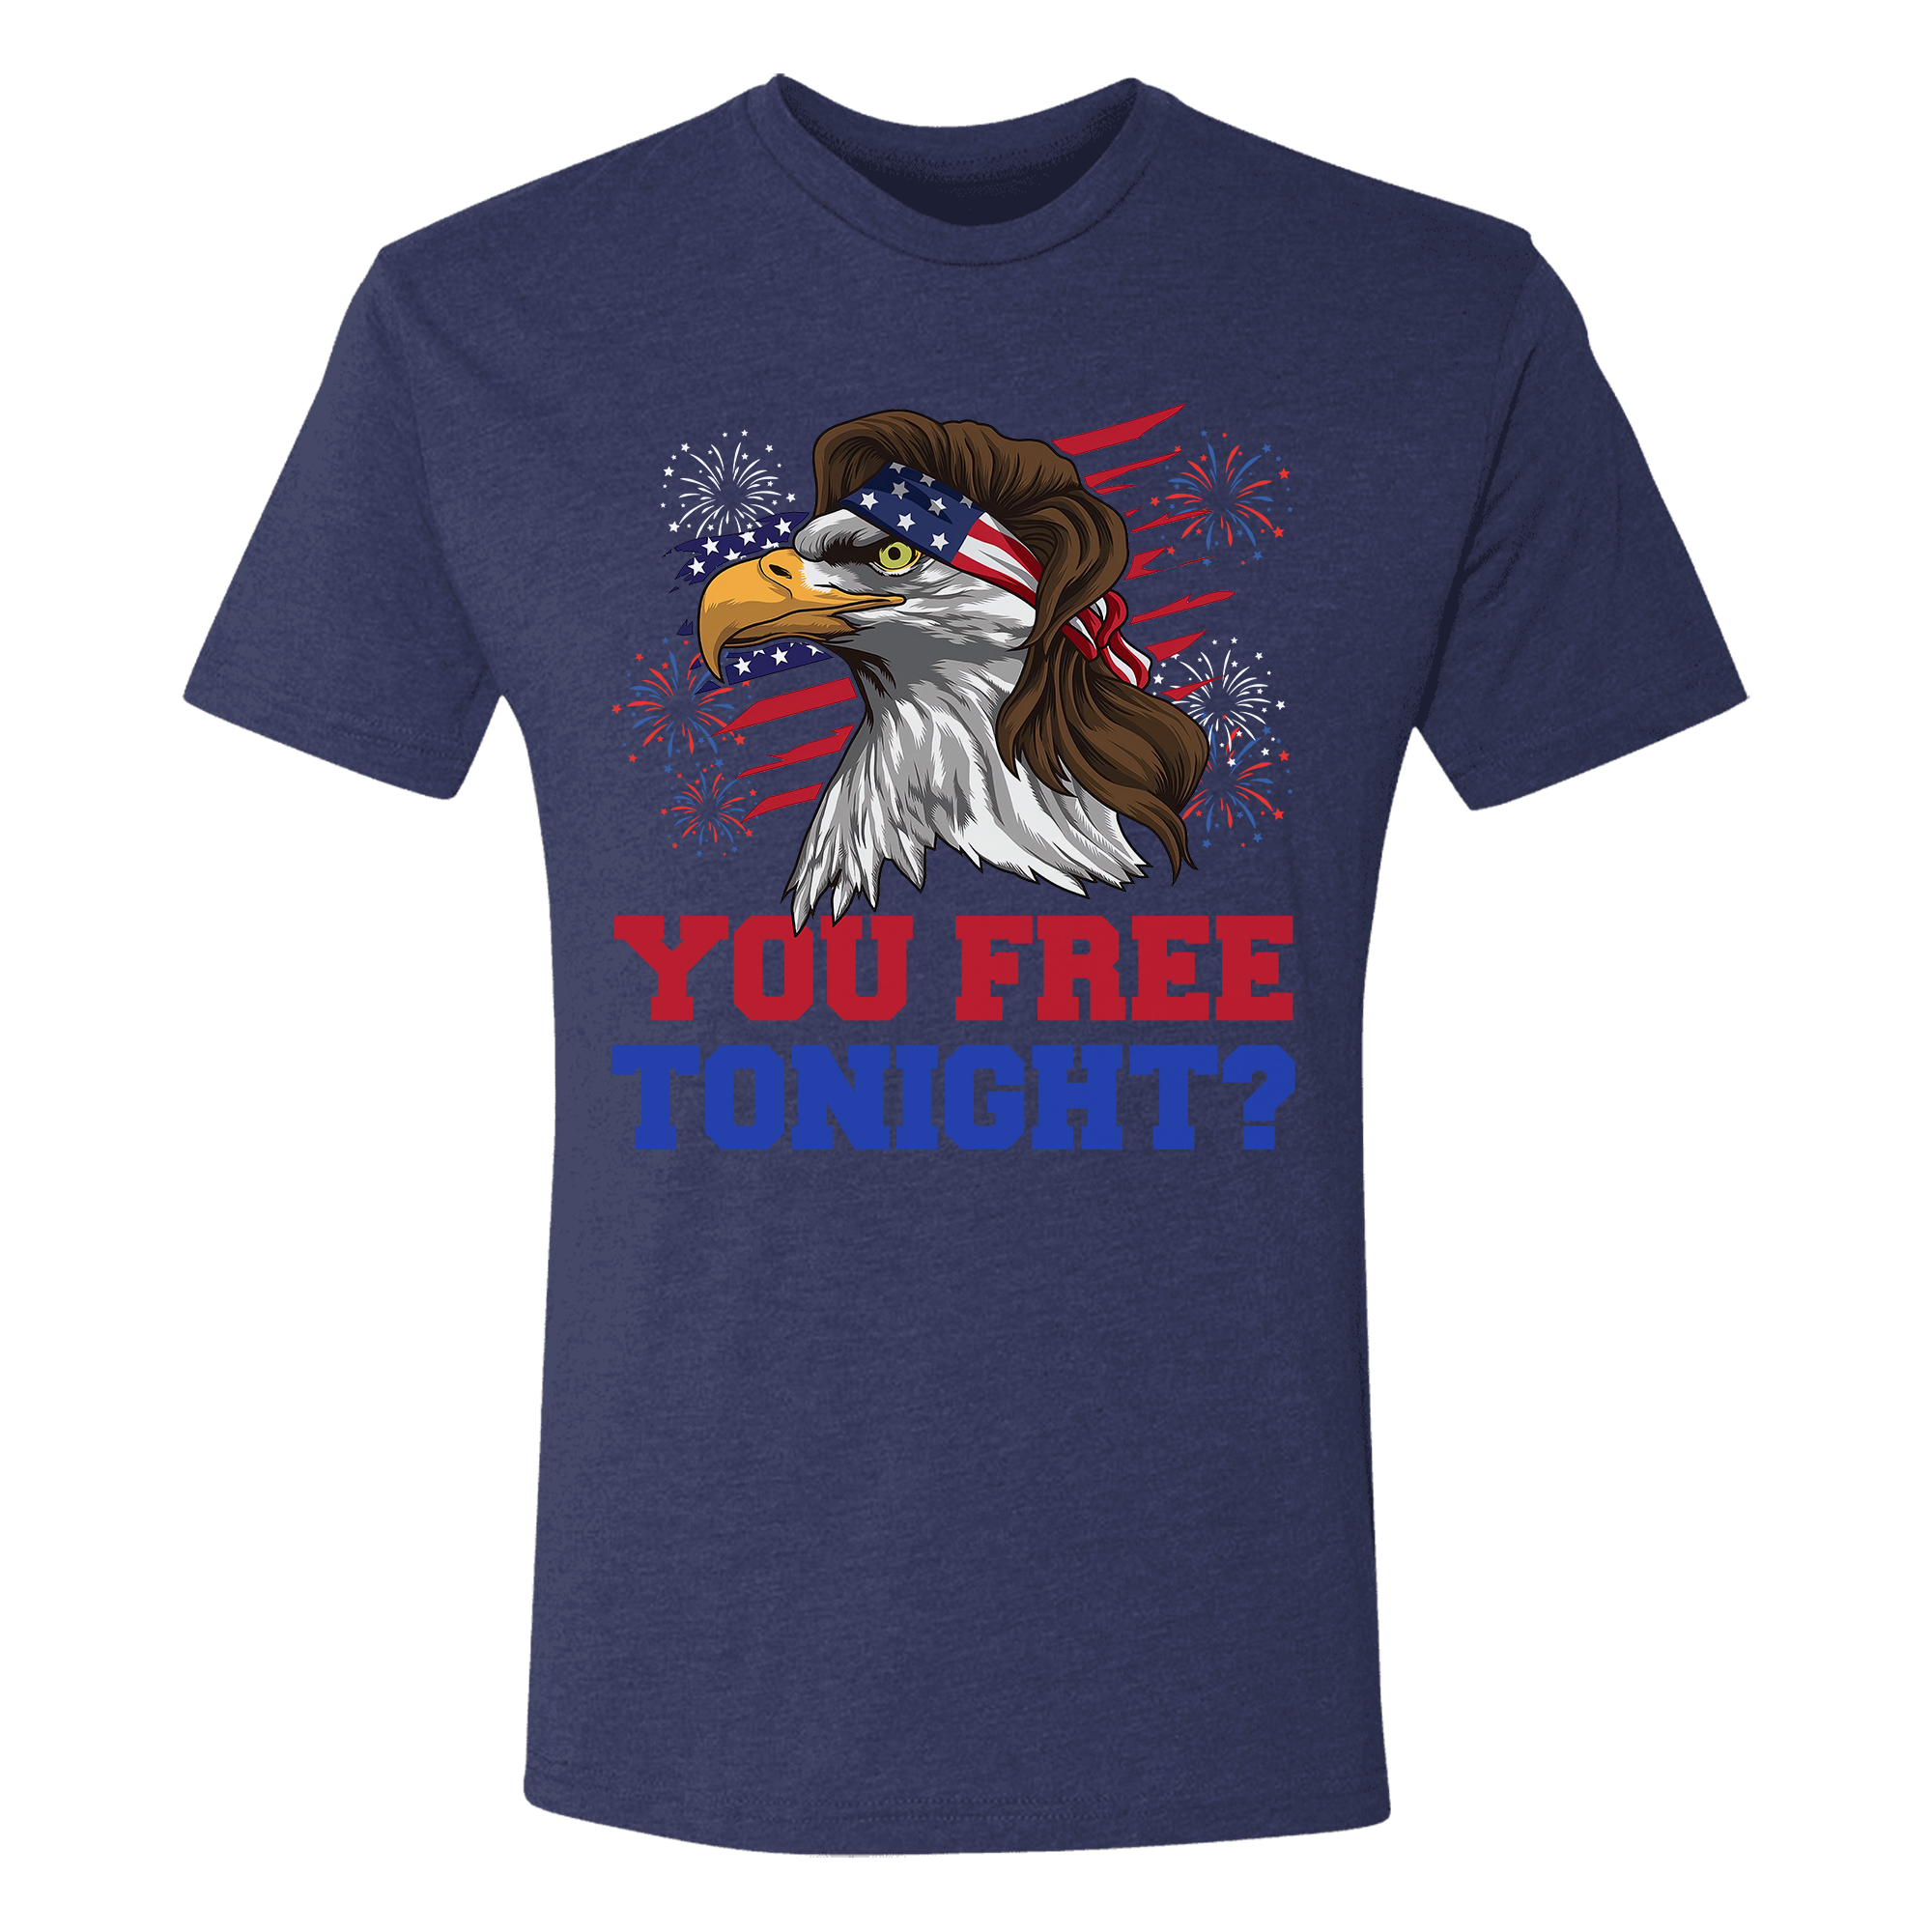 You Free Tonight T-shirt - GB43